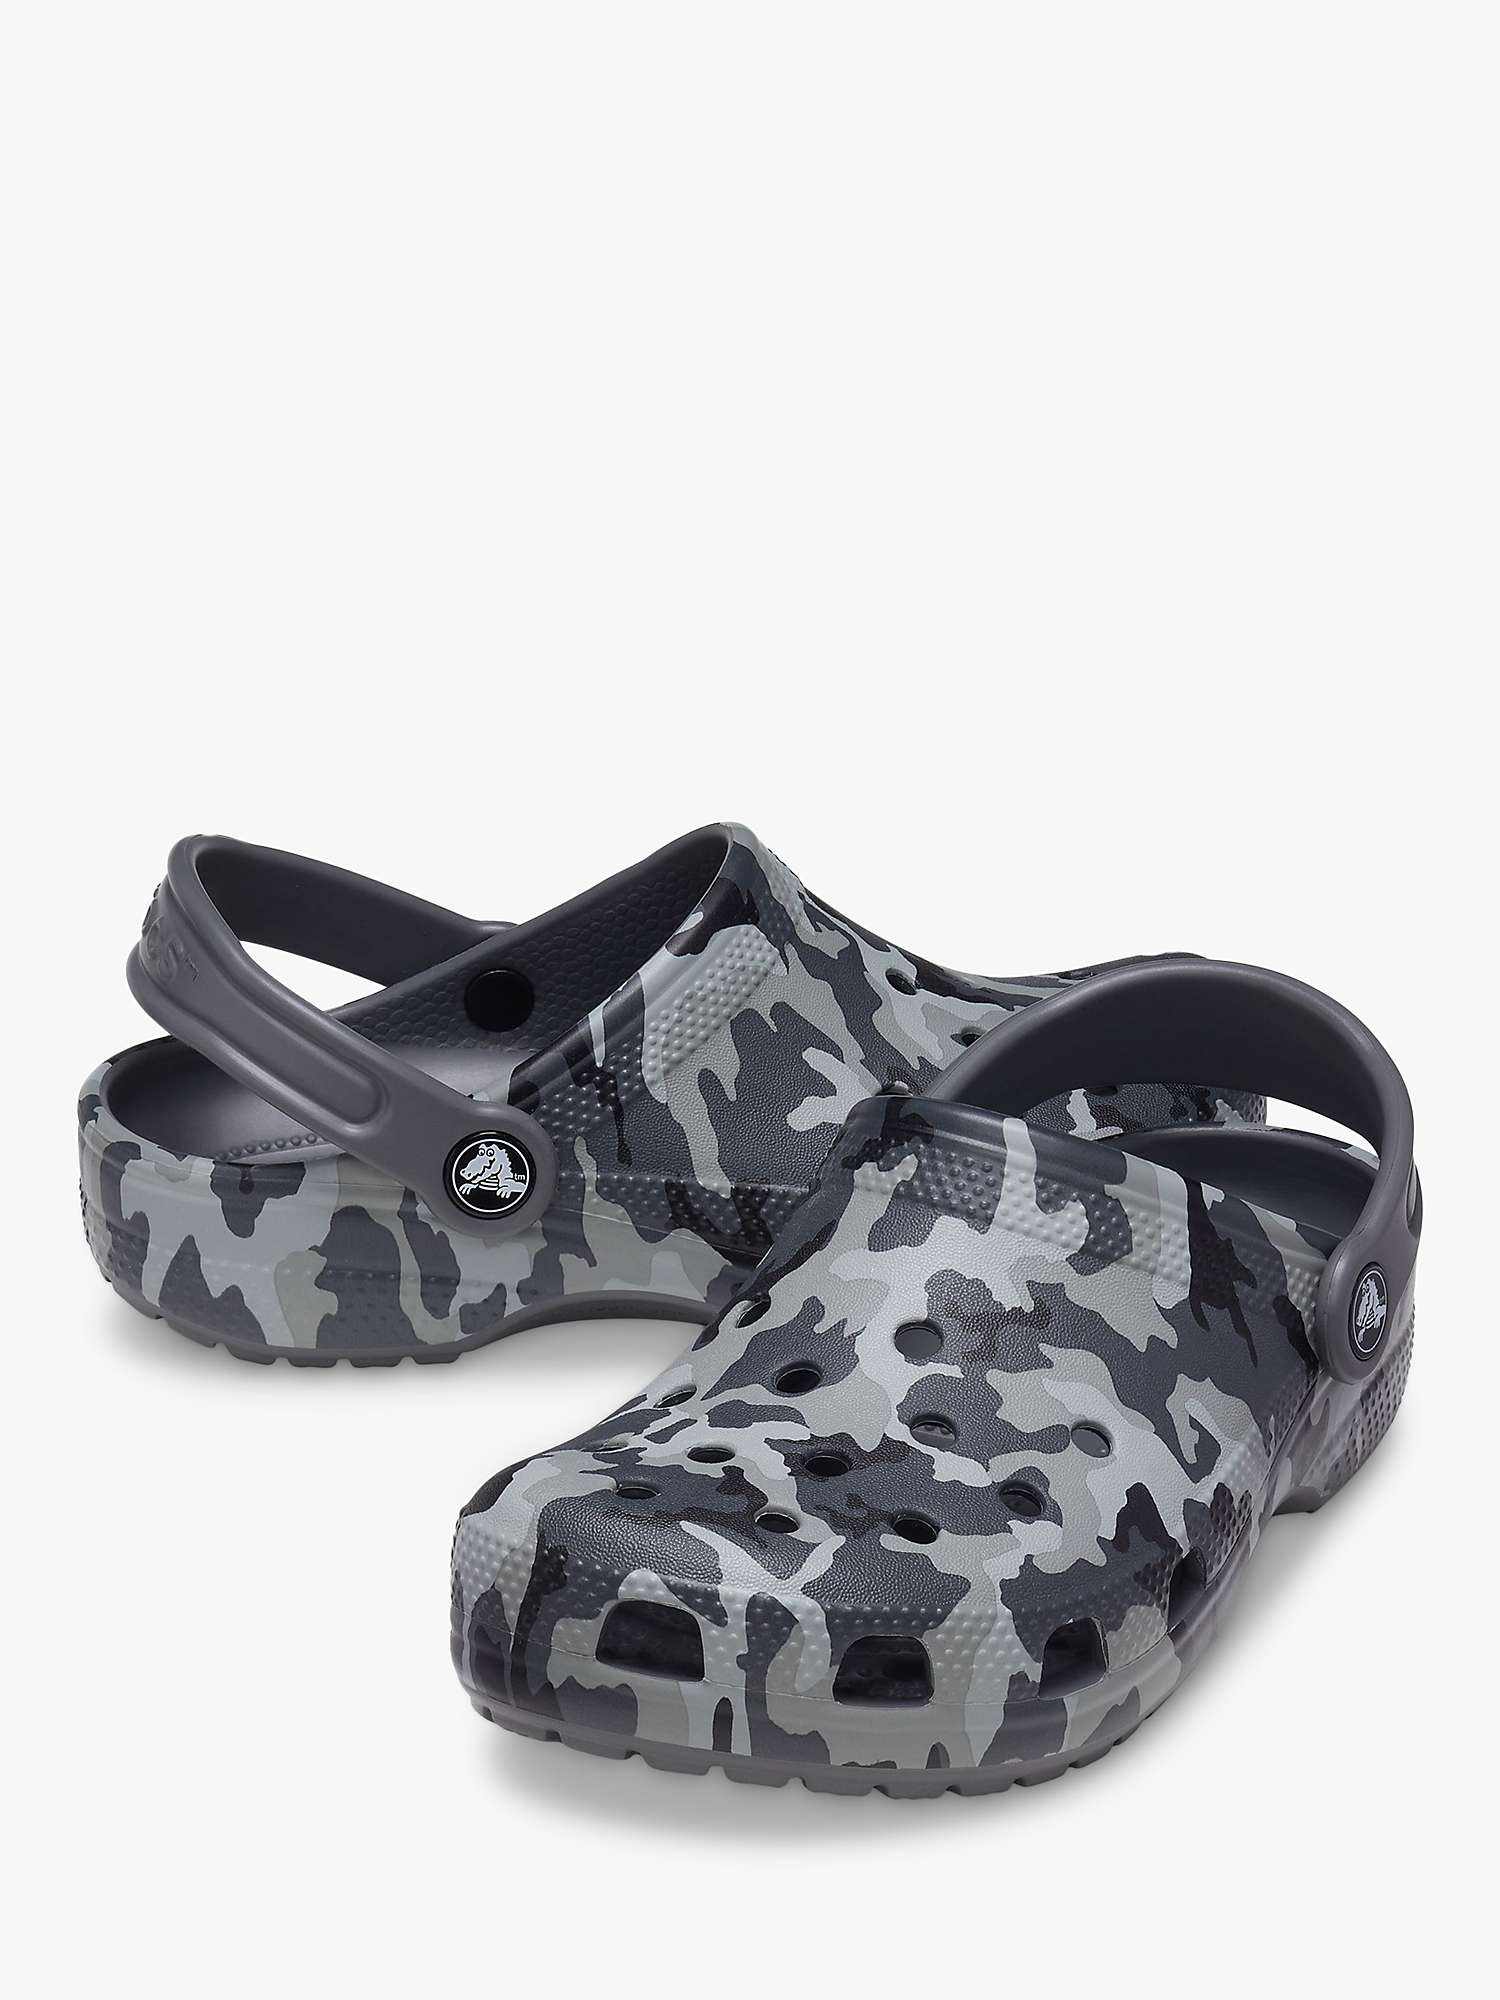 Buy Crocs Kids' Classic Camouflage Print Clogs, Black/Grey Online at johnlewis.com